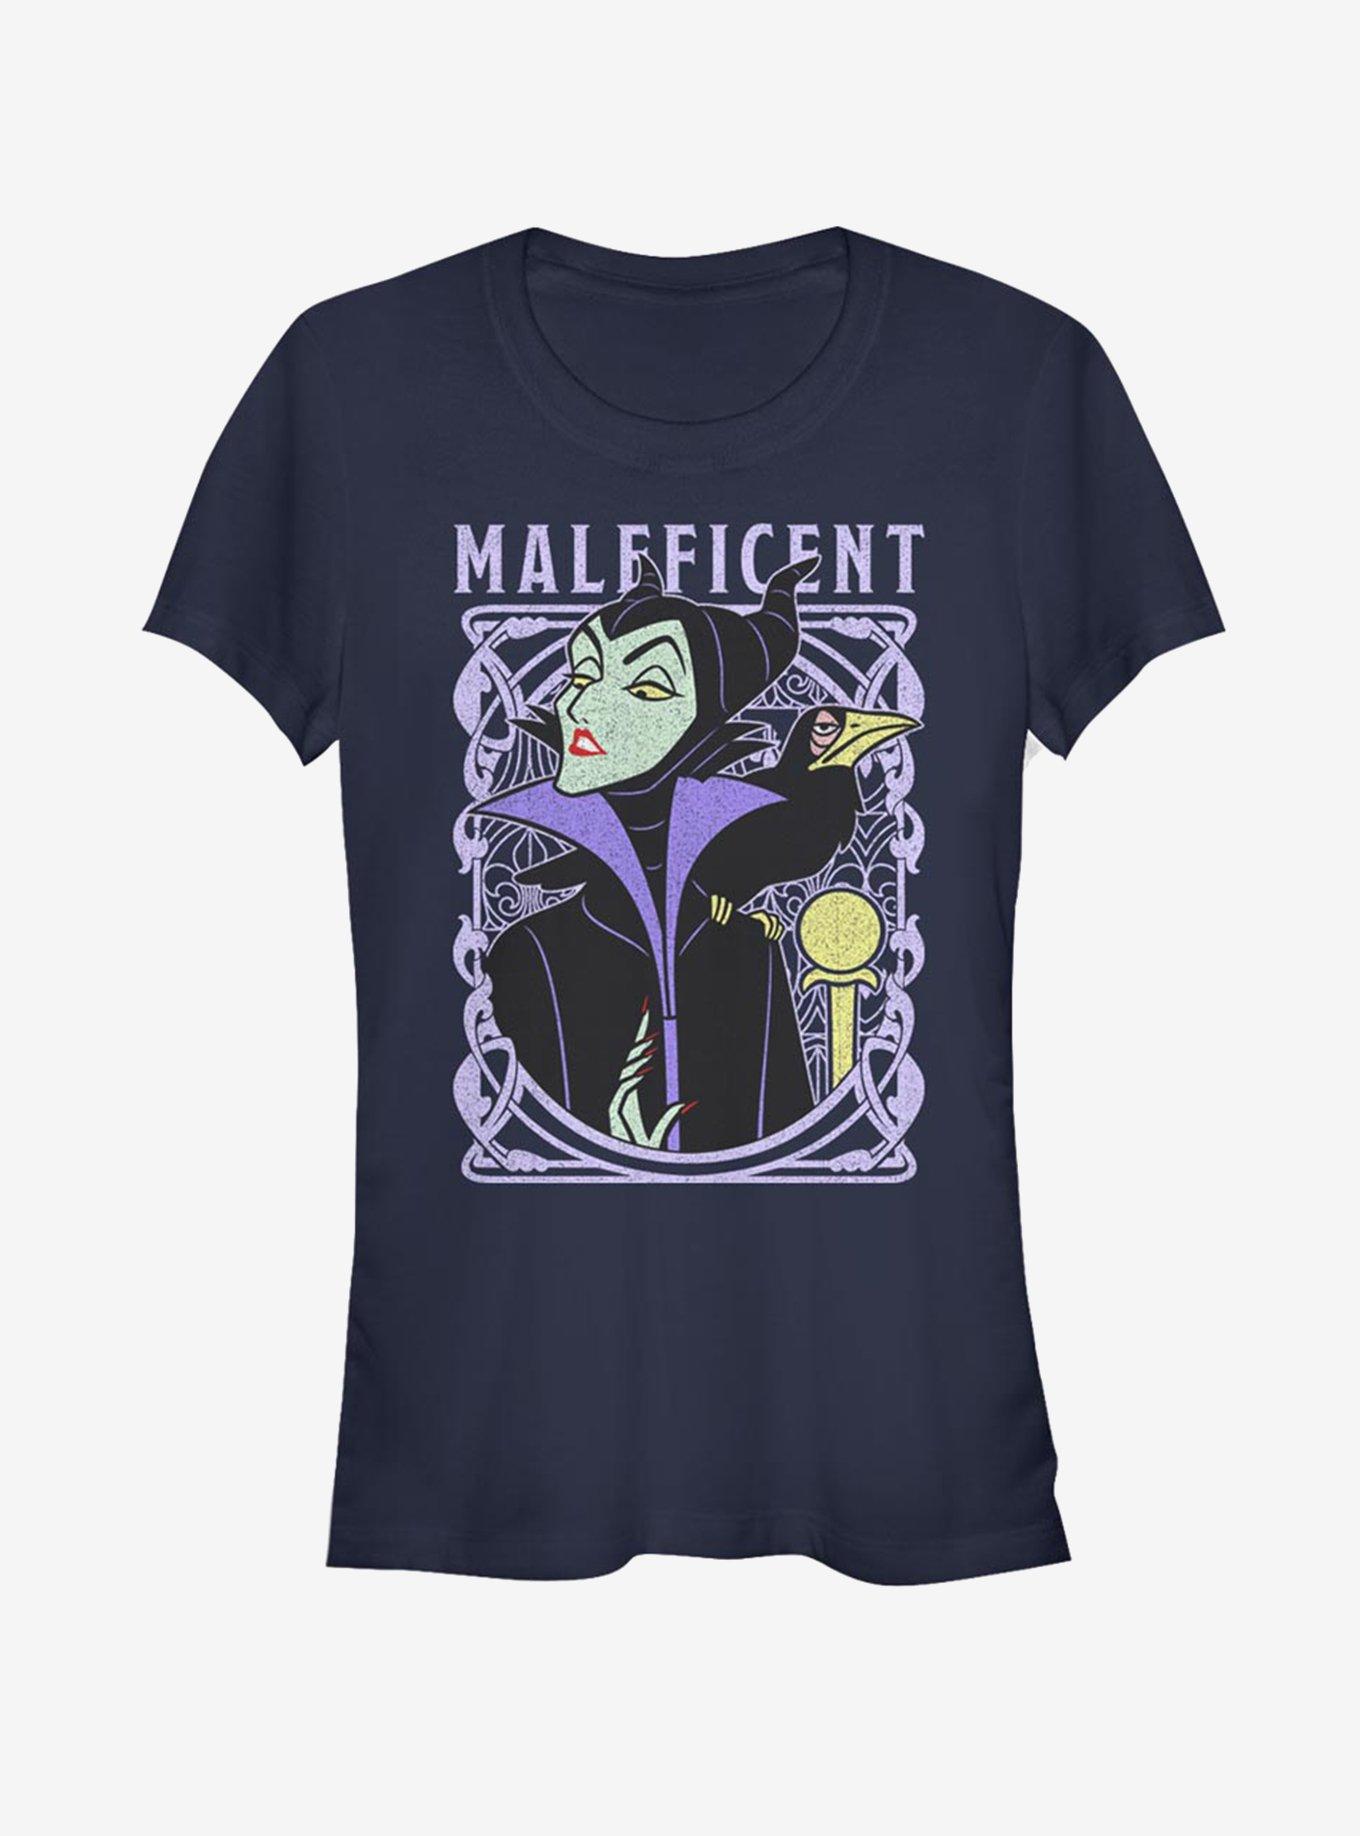 Disney Sleeping Beauty Maleficent Color Girls T-Shirt, NAVY, hi-res